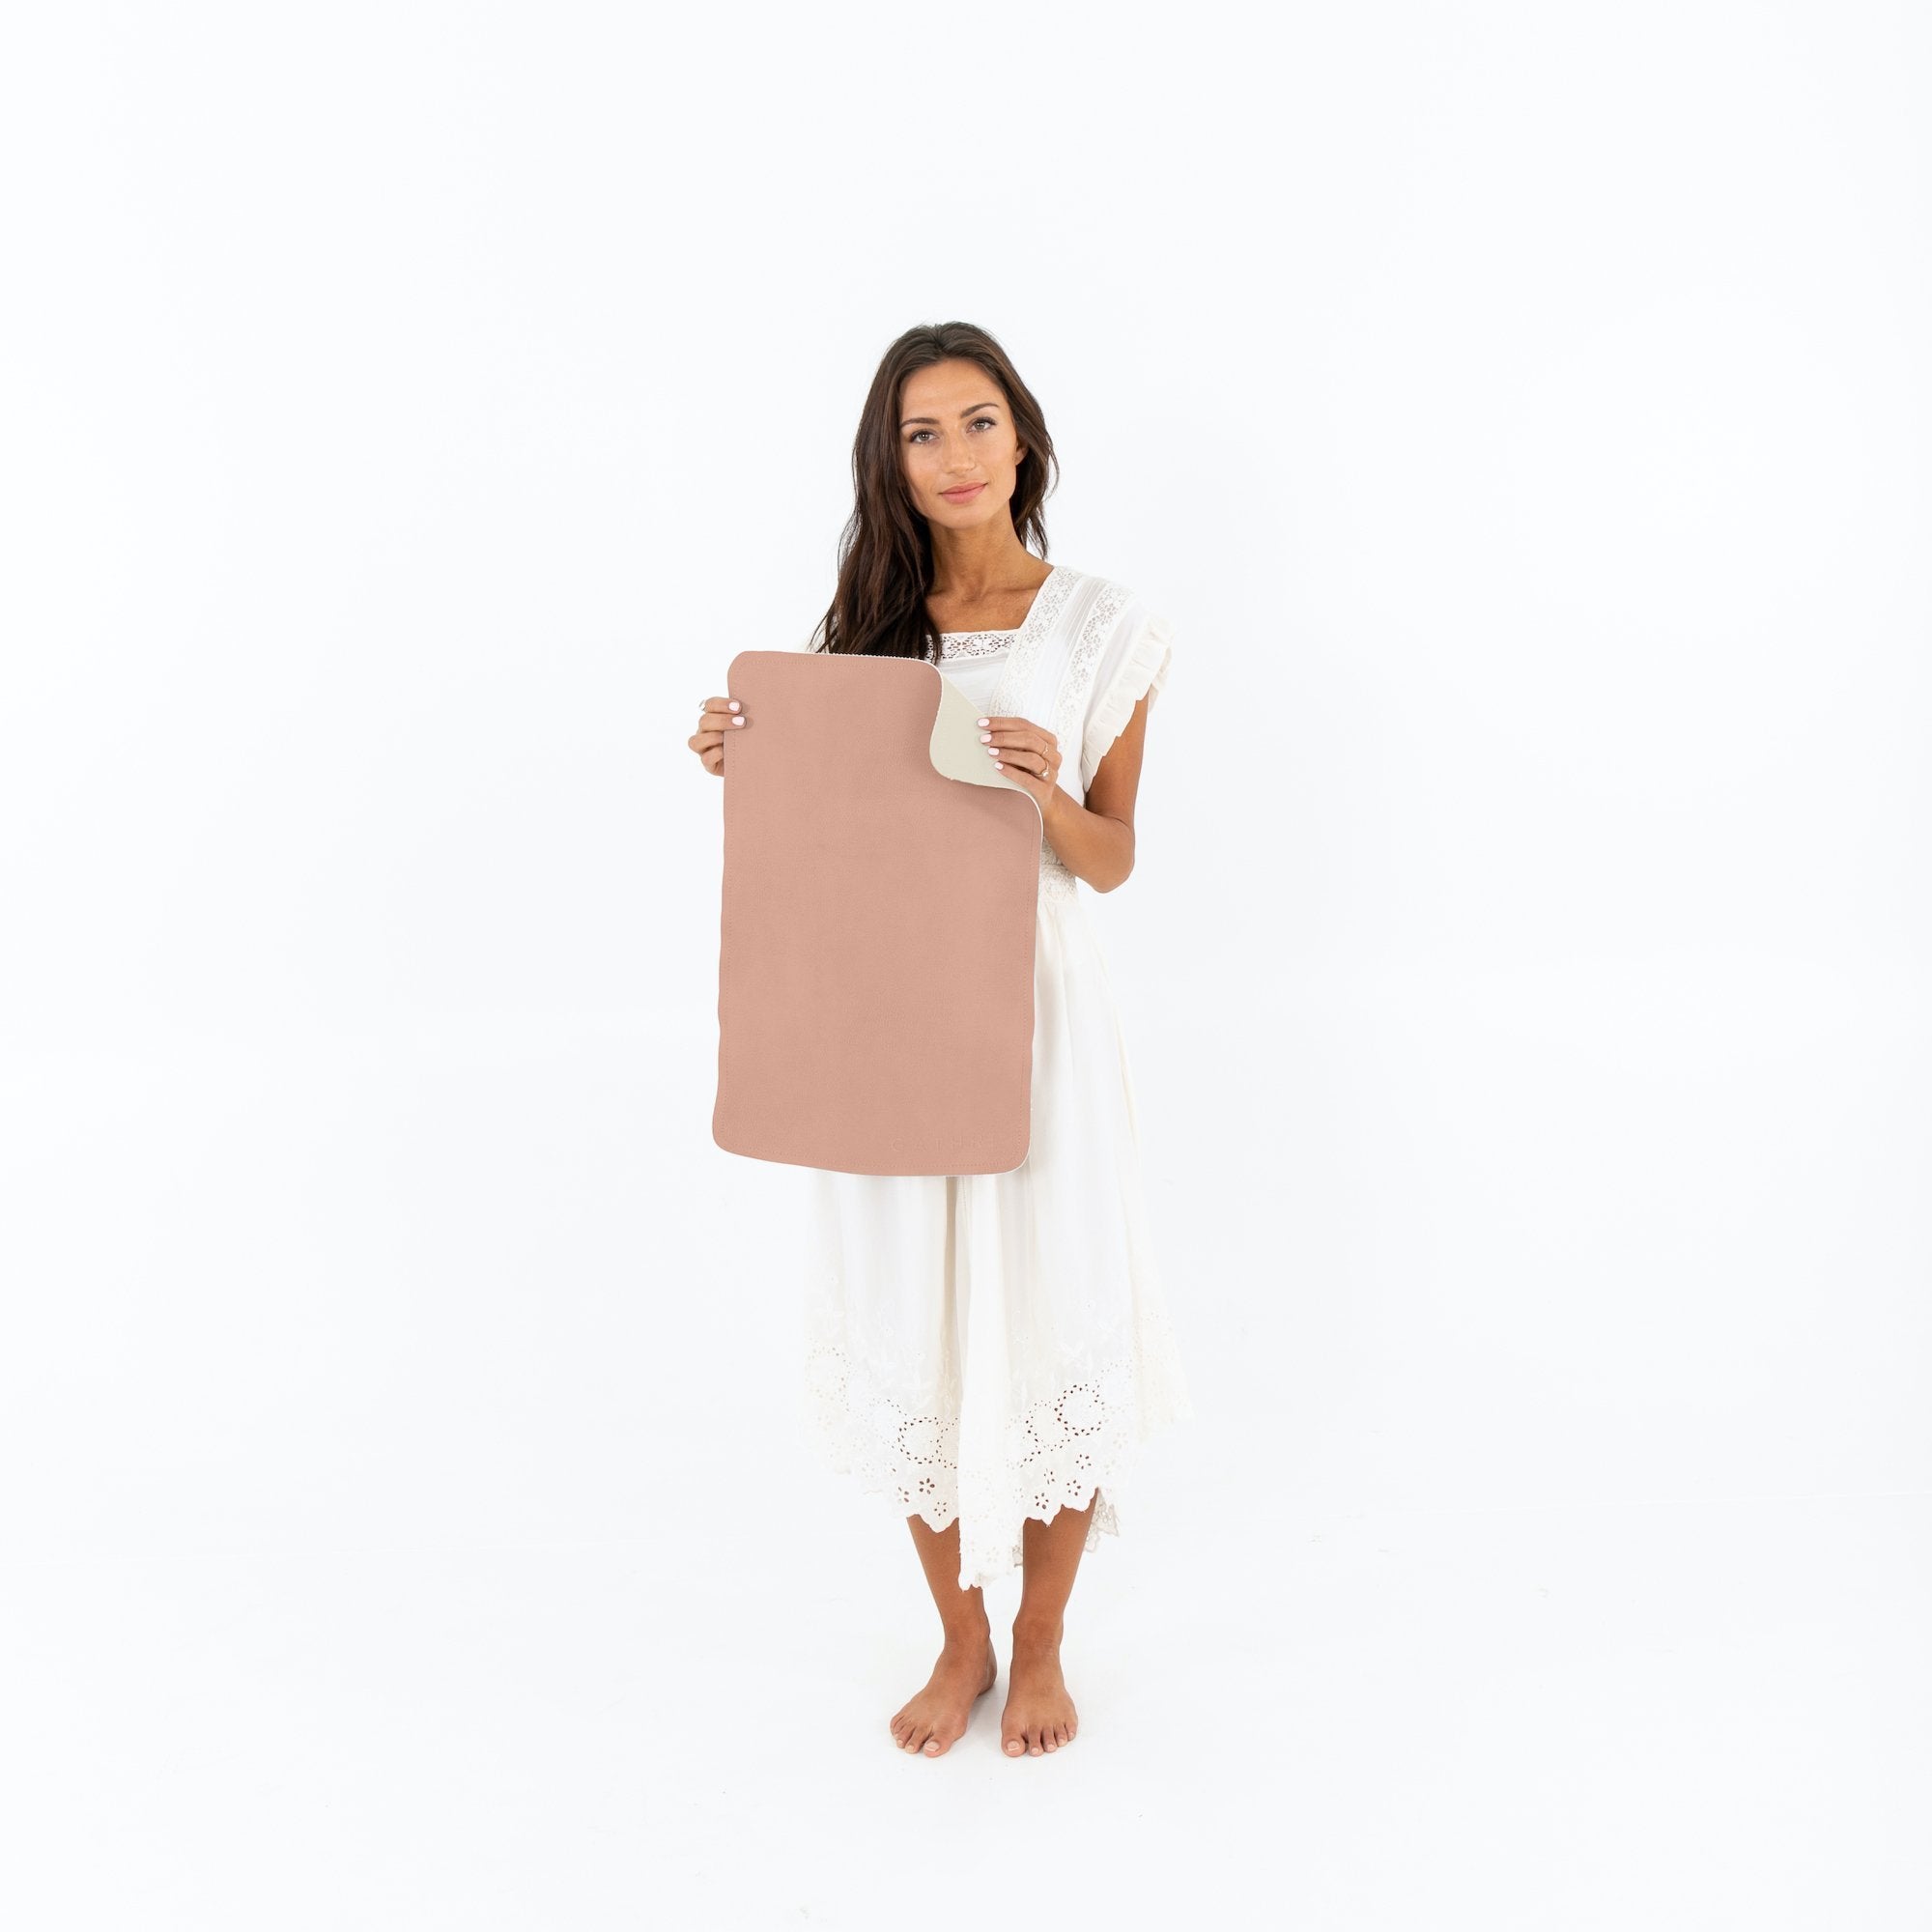 Sienna • Blanc (on sale)@Woman holding the Sienna/Blanc Micro Mat